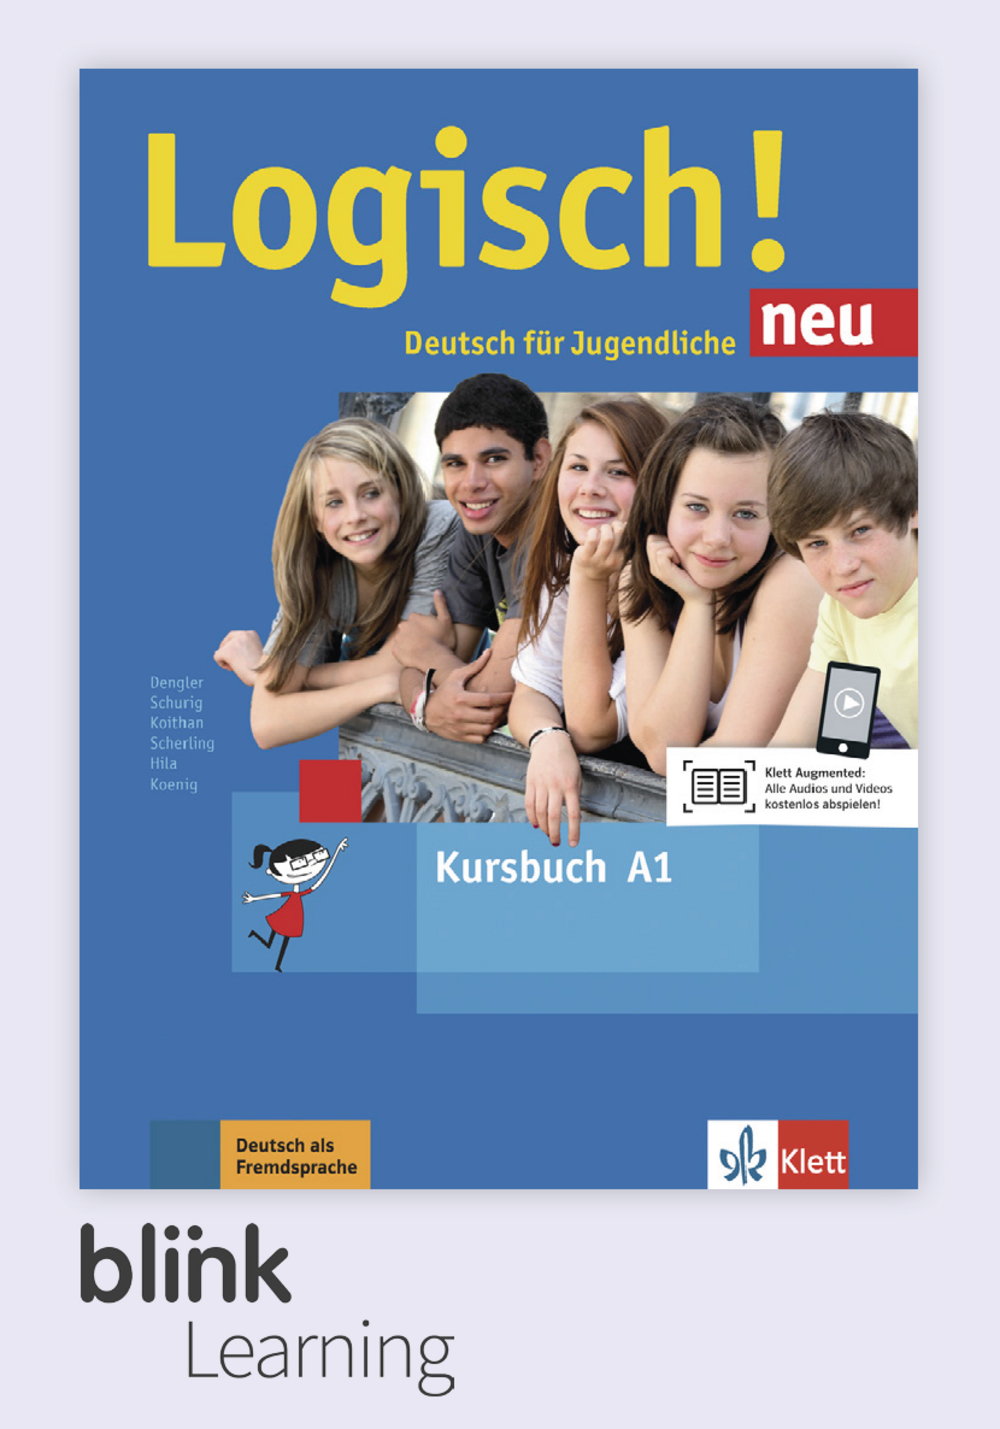 Logisch! NEU A1 Digital Kursbuch für Lernende / Цифровой учебник для ученика